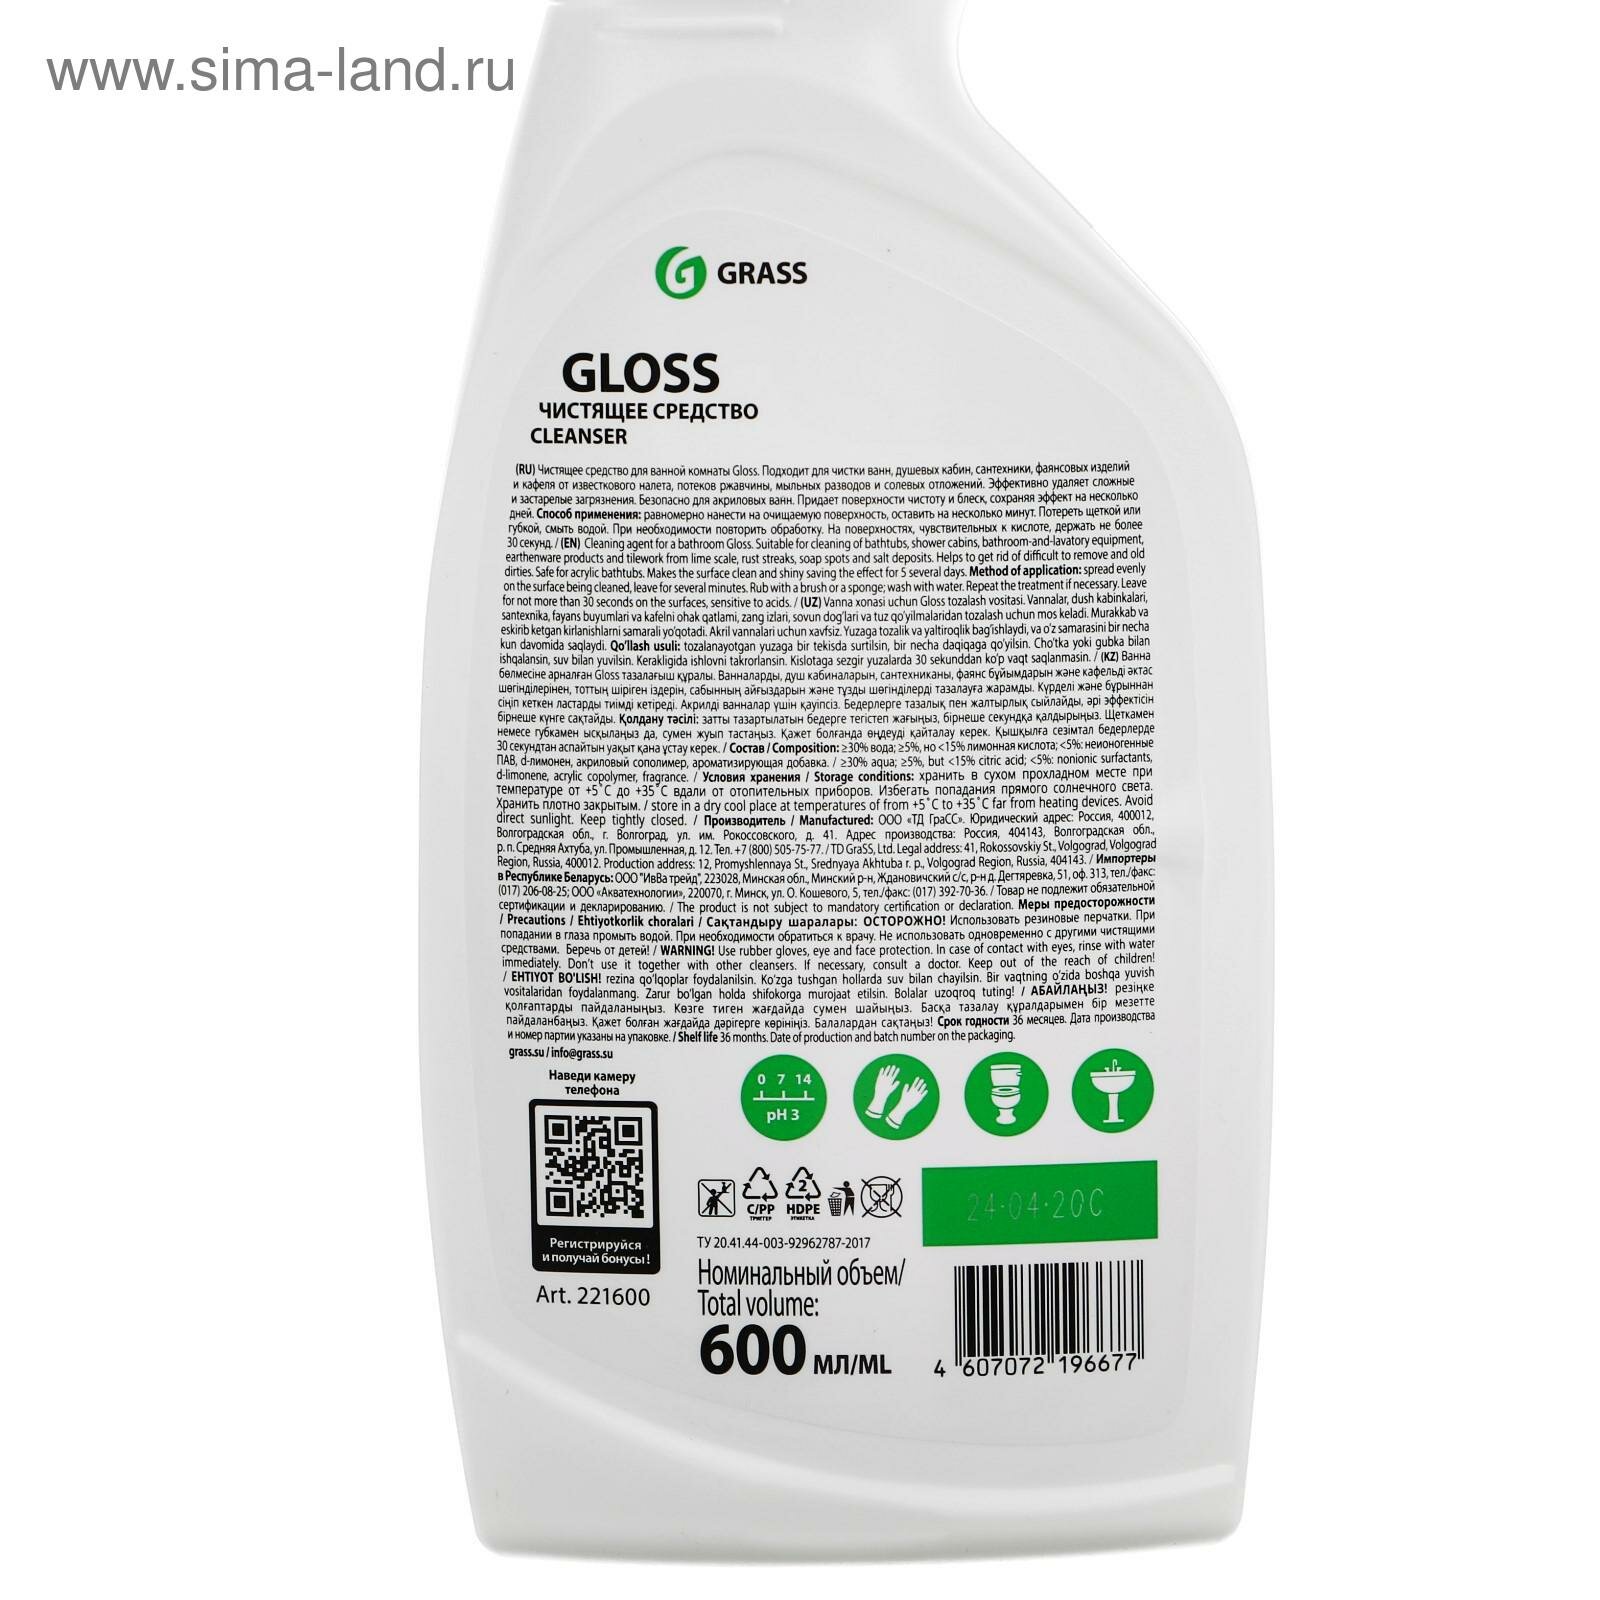 Чистящее средство Gloss антиналет, спрей, для сантехники, 600 мл - фотография № 2